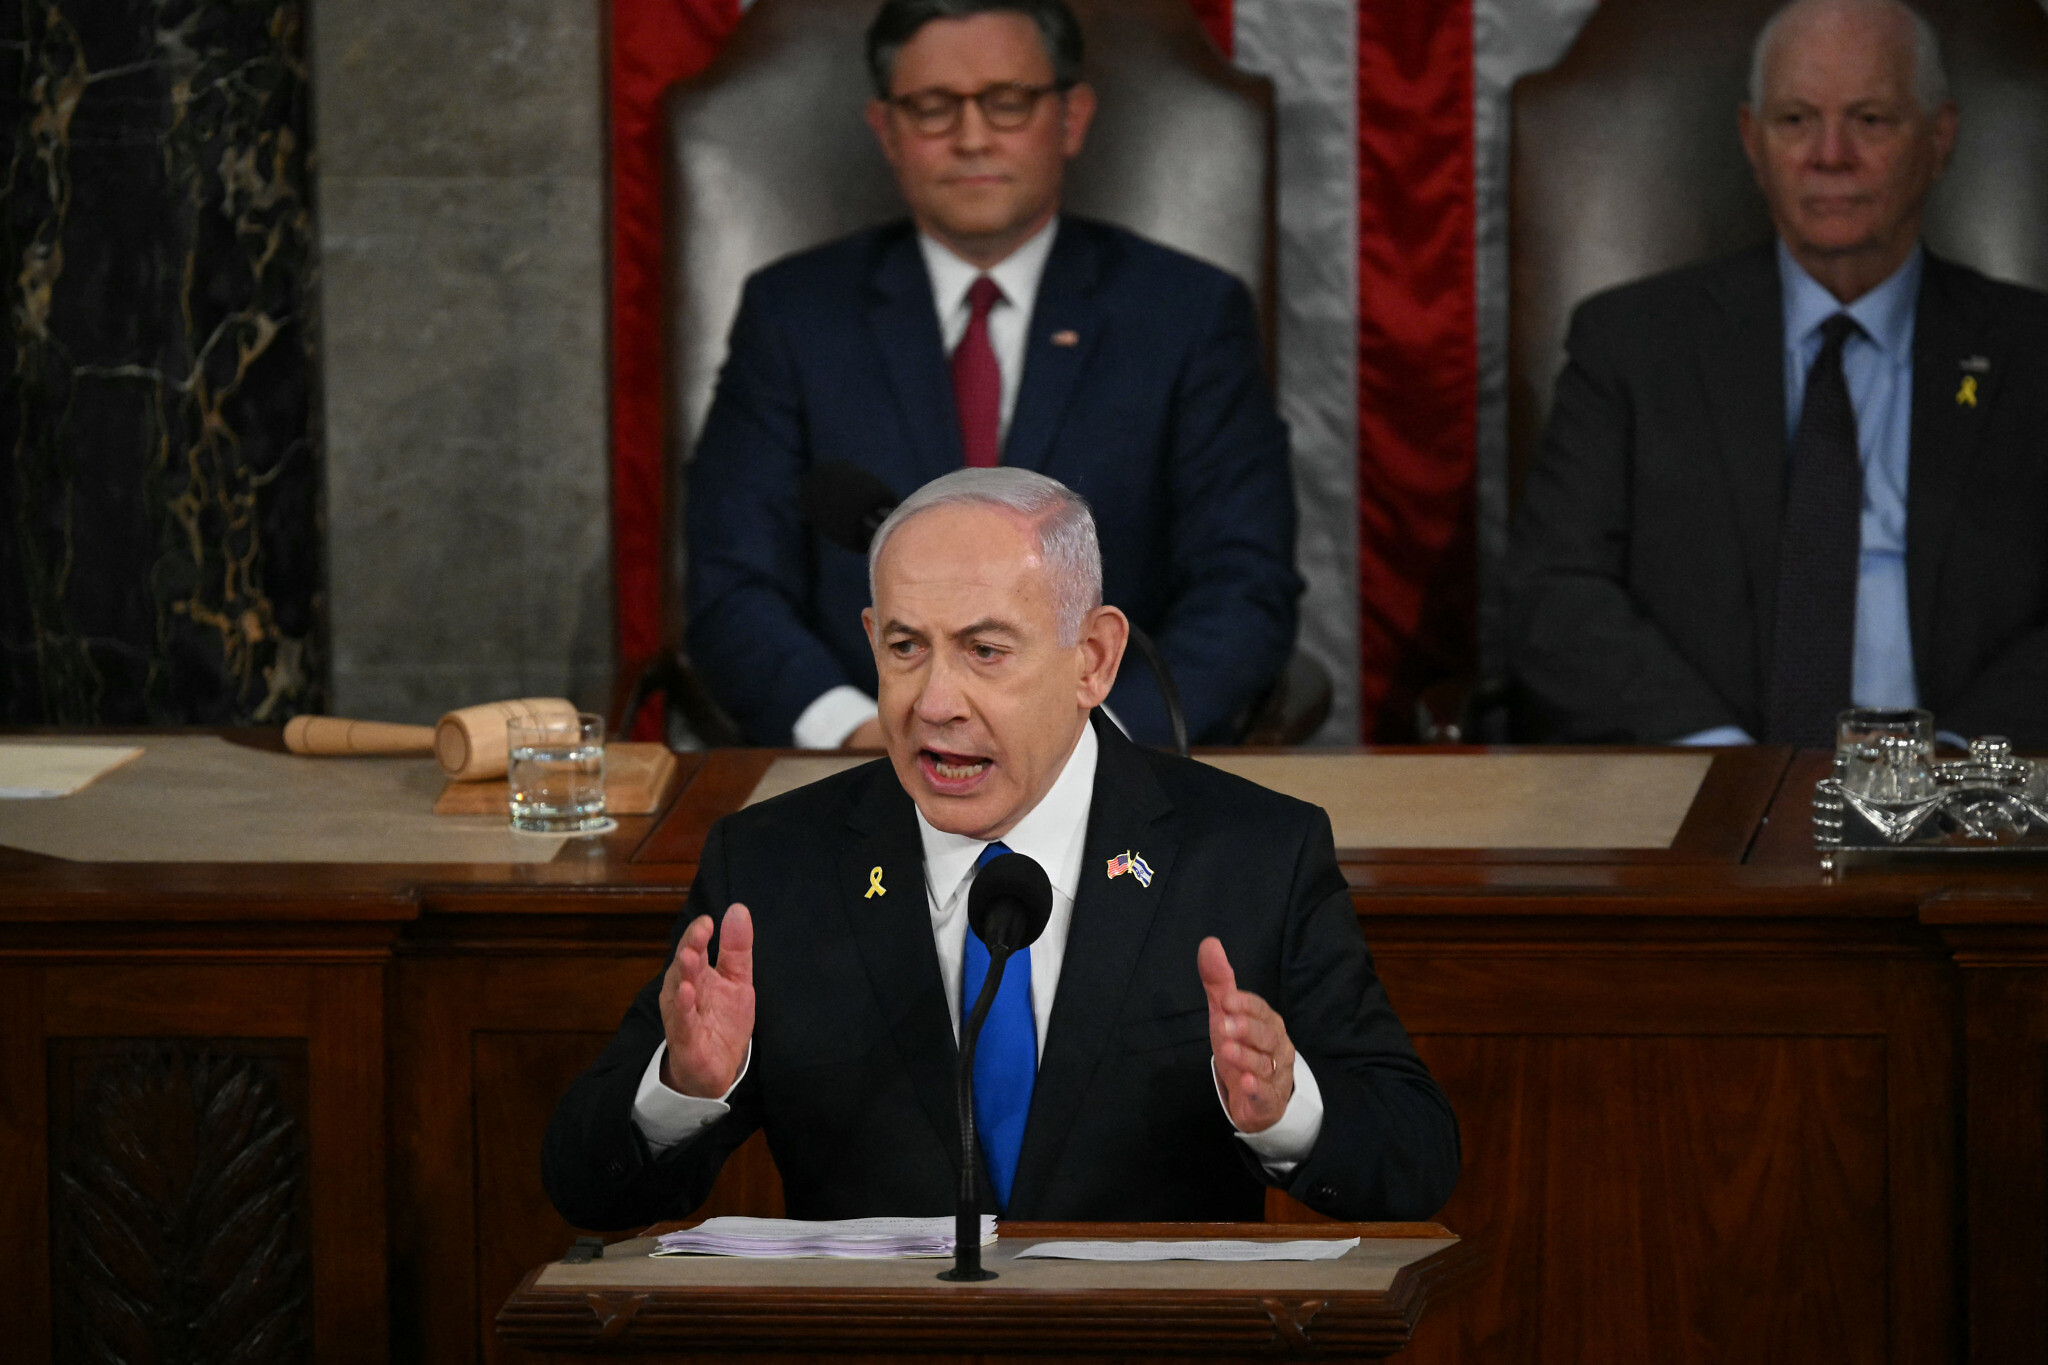 Congres prijst oorlogsmisdadiger Netanyahu